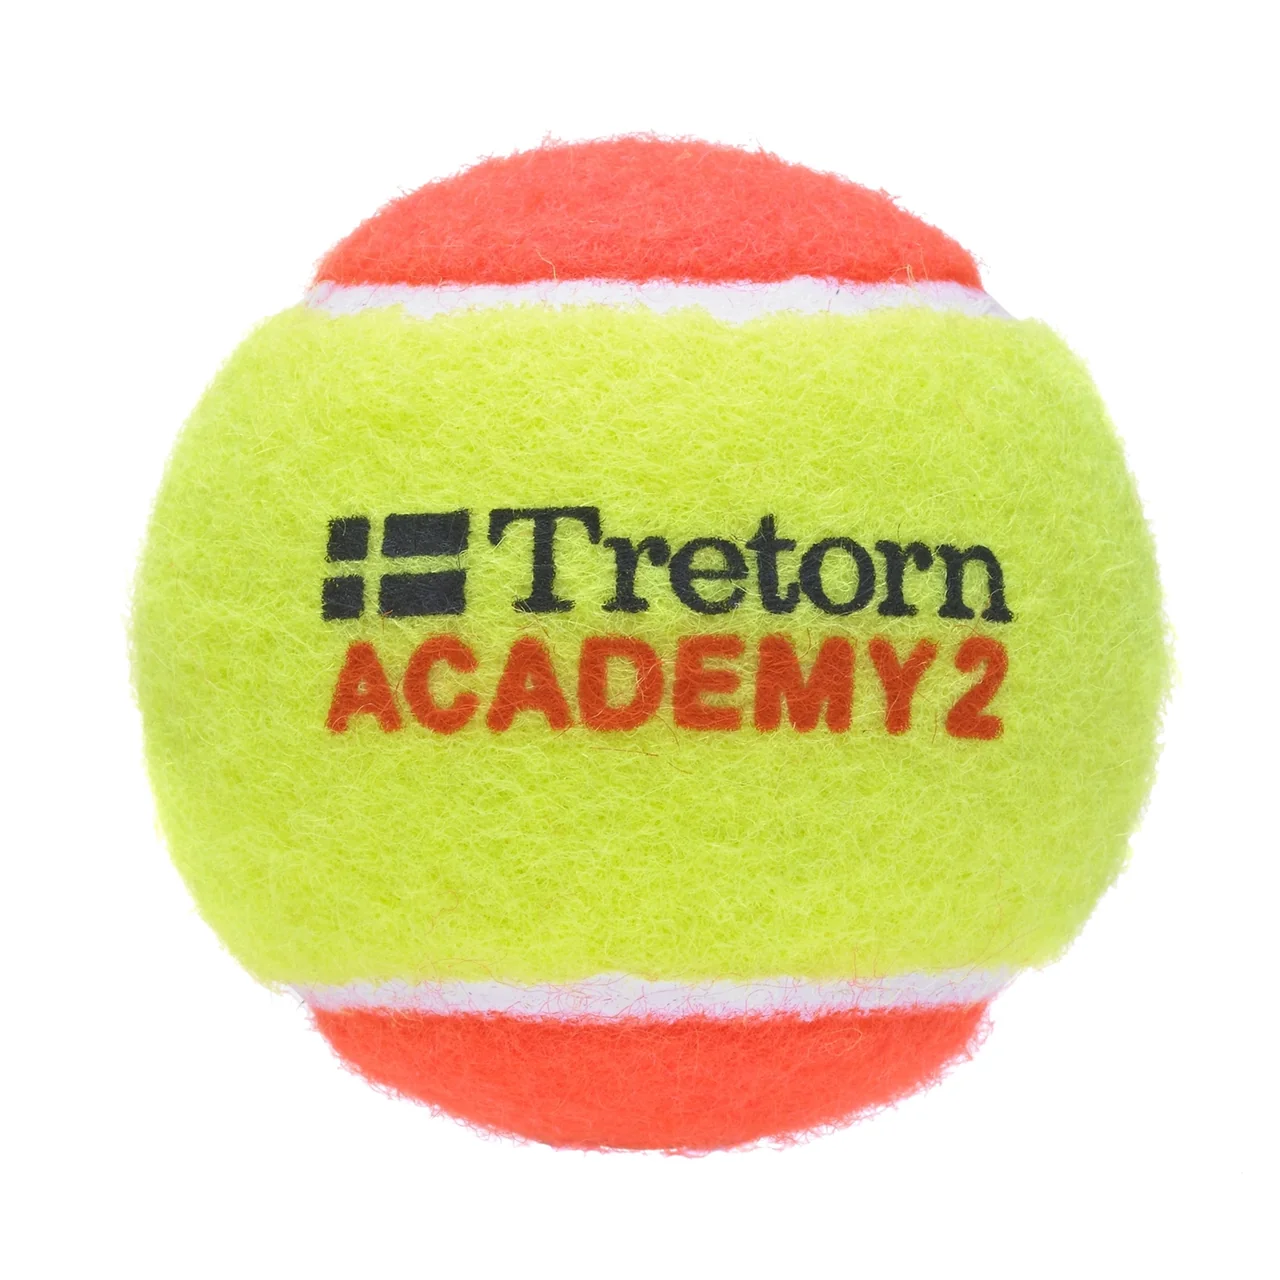 Tretorn Academy Stage 2. 72 balles